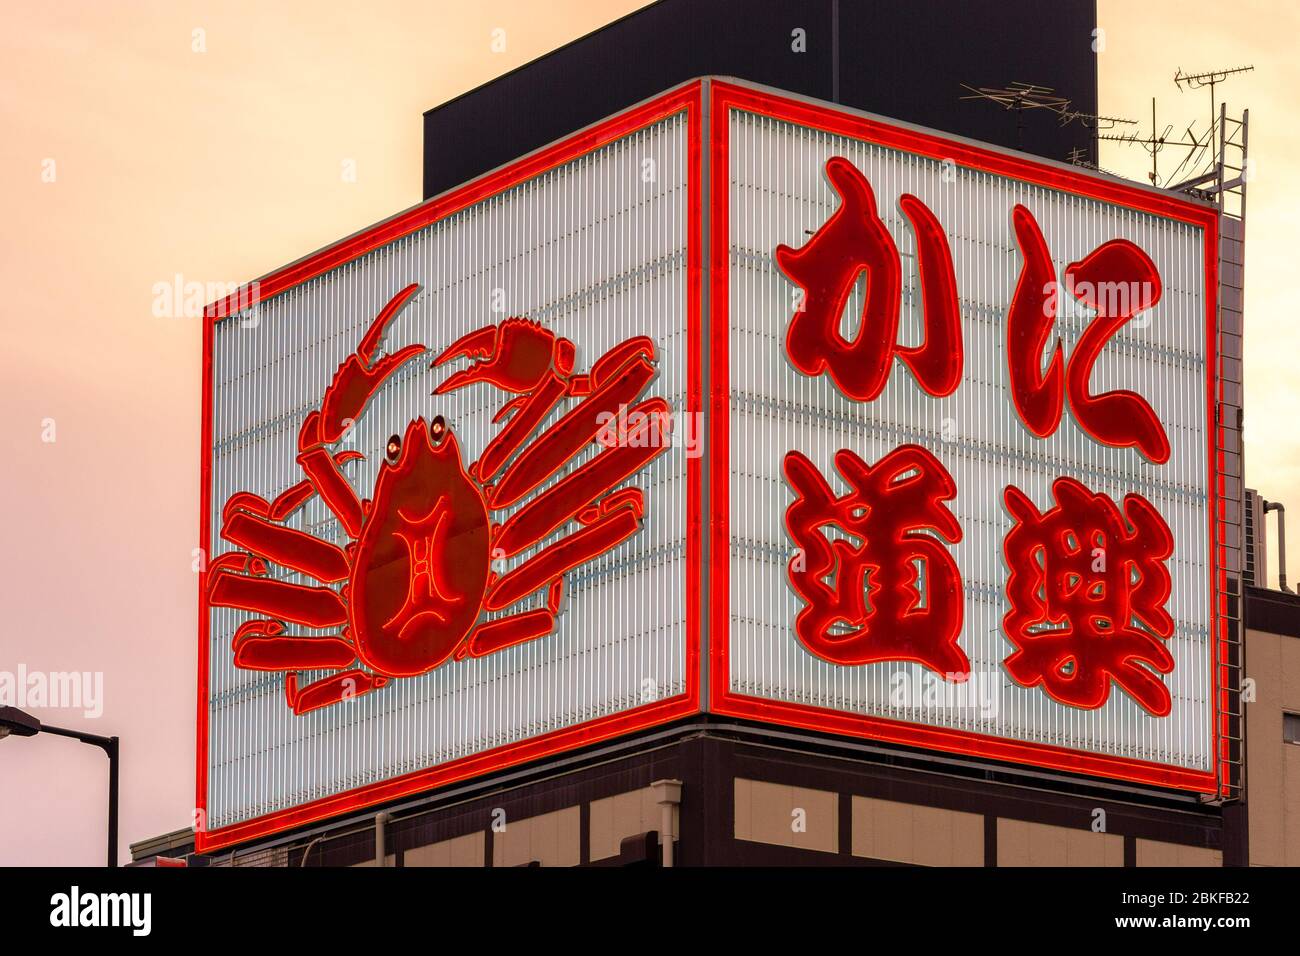 Osaka / Japan - October 1, 2017: Giant neon sign of a crab advertising famous Kani Douraku restaurant in popular Dotonbori area, Osaka, Japan Stock Photo